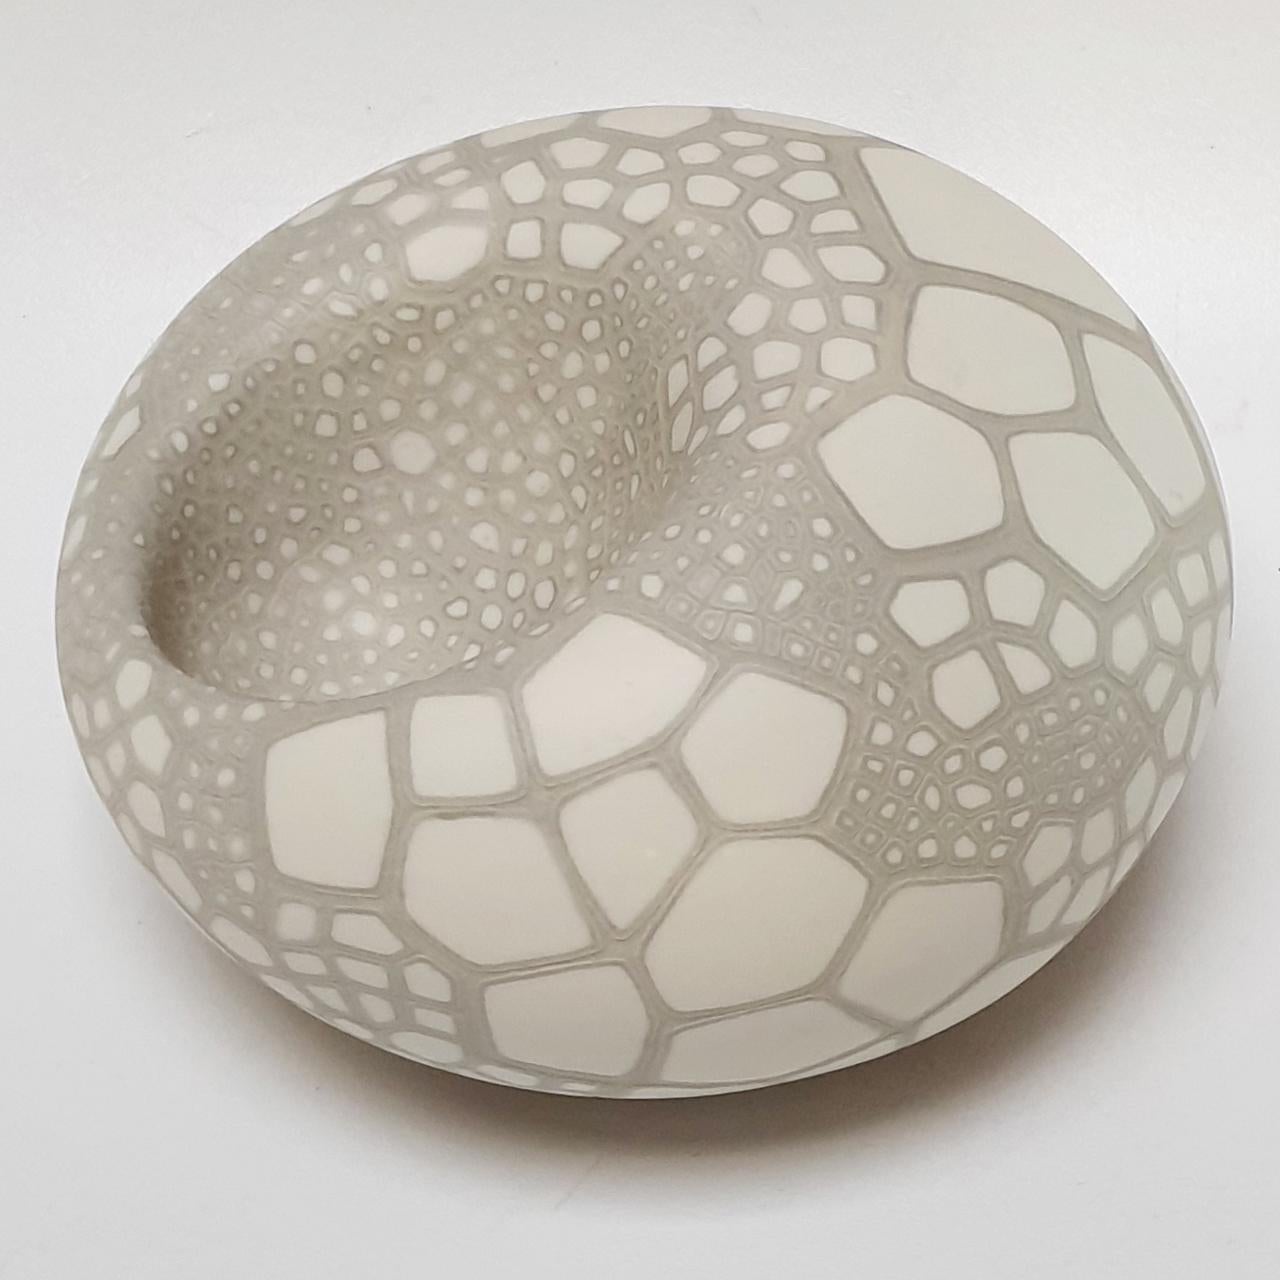 Objekt gemustert - contemporary modern abstract organic ceramic sculpture object - Contemporary Sculpture by Petra Benndorf